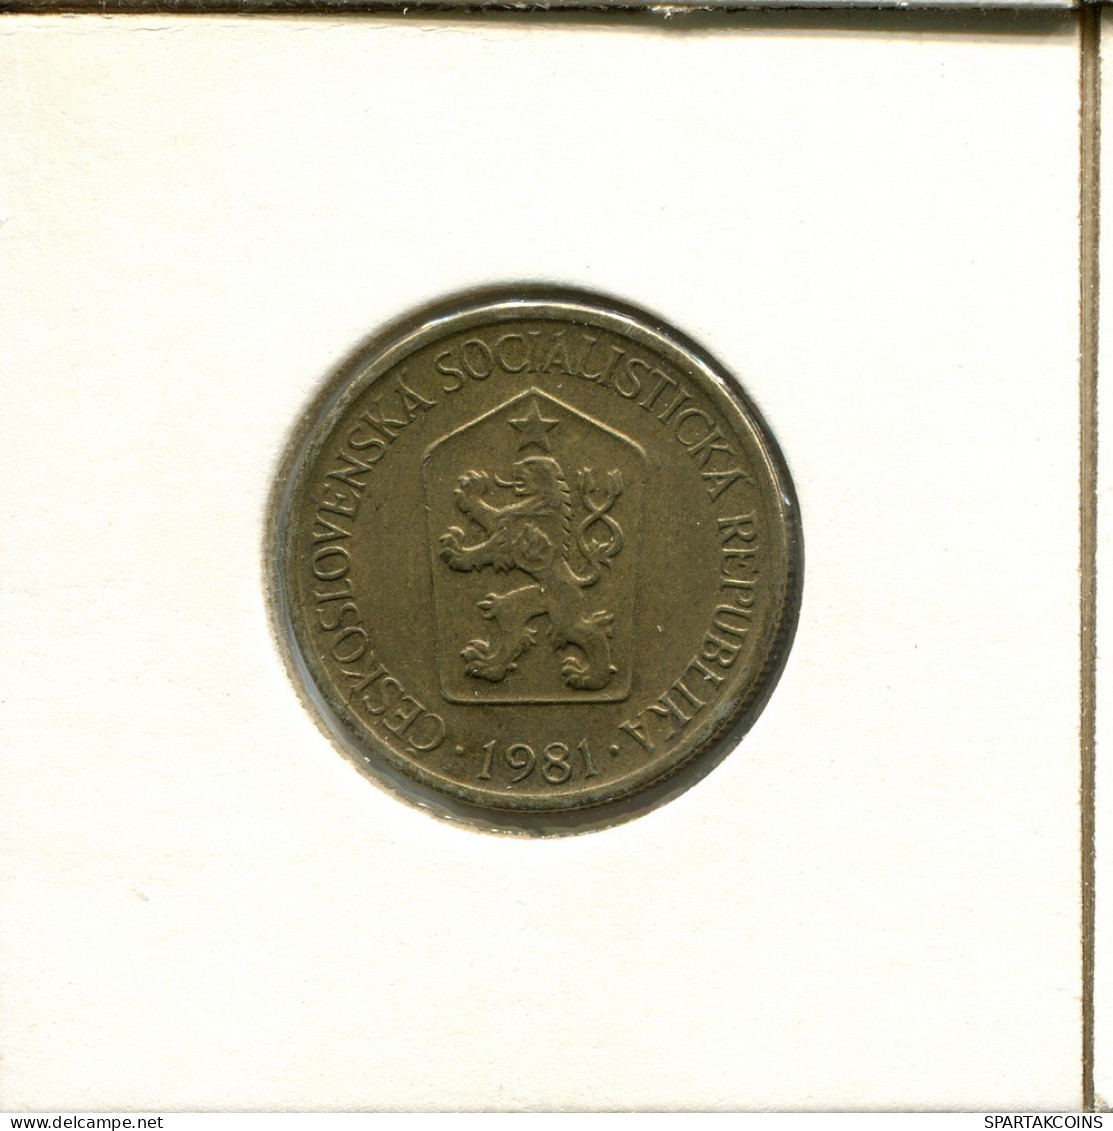 1 KORUNA 1981 CZECHOSLOVAKIA Coin #AS969.U.A - Tschechoslowakei